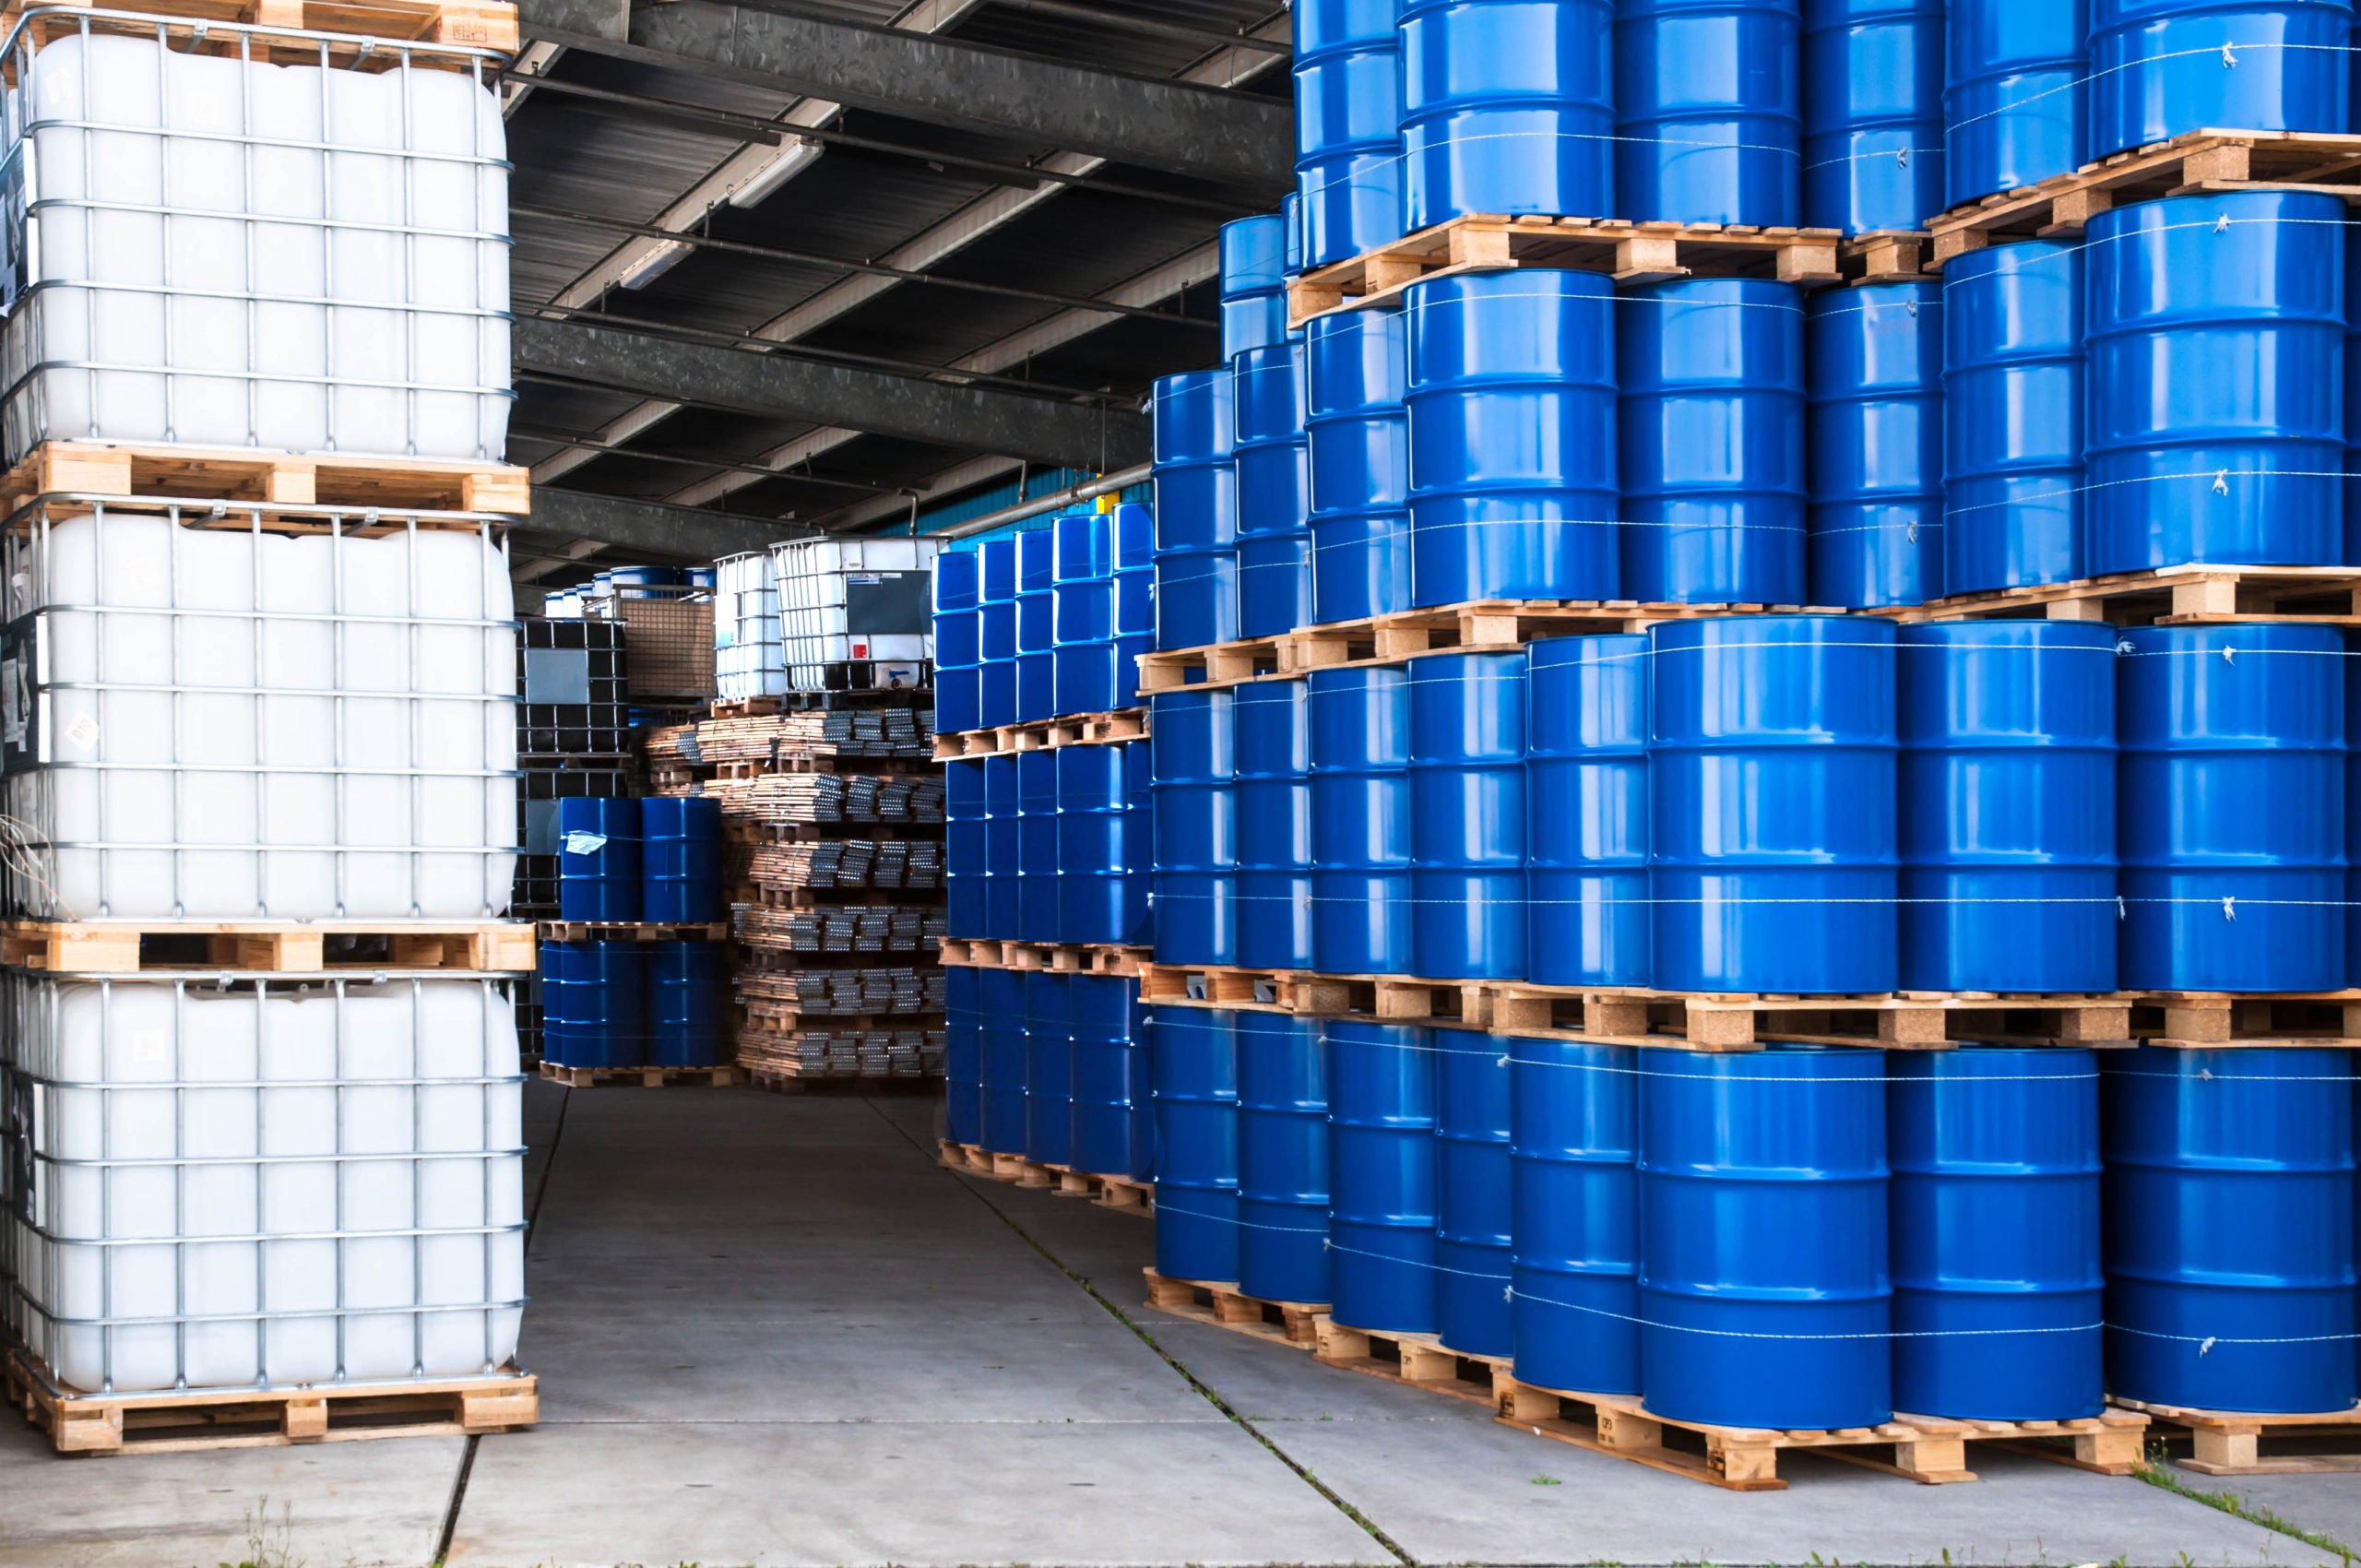 Hazardous liquid waste containers